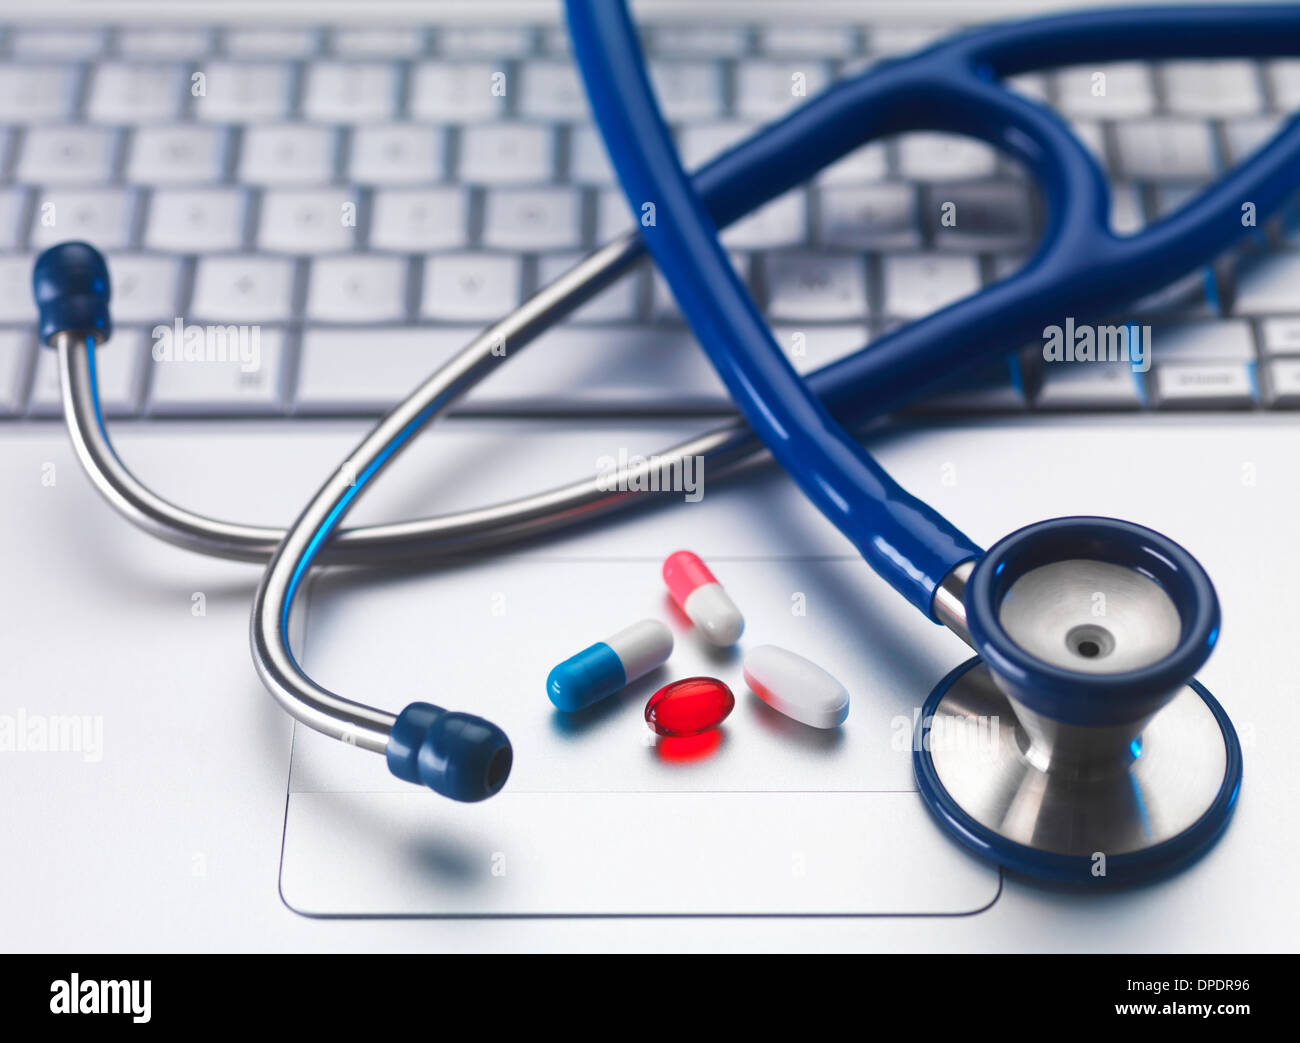 Stethoscope and medicine on laptop computer, still life Stock Photo